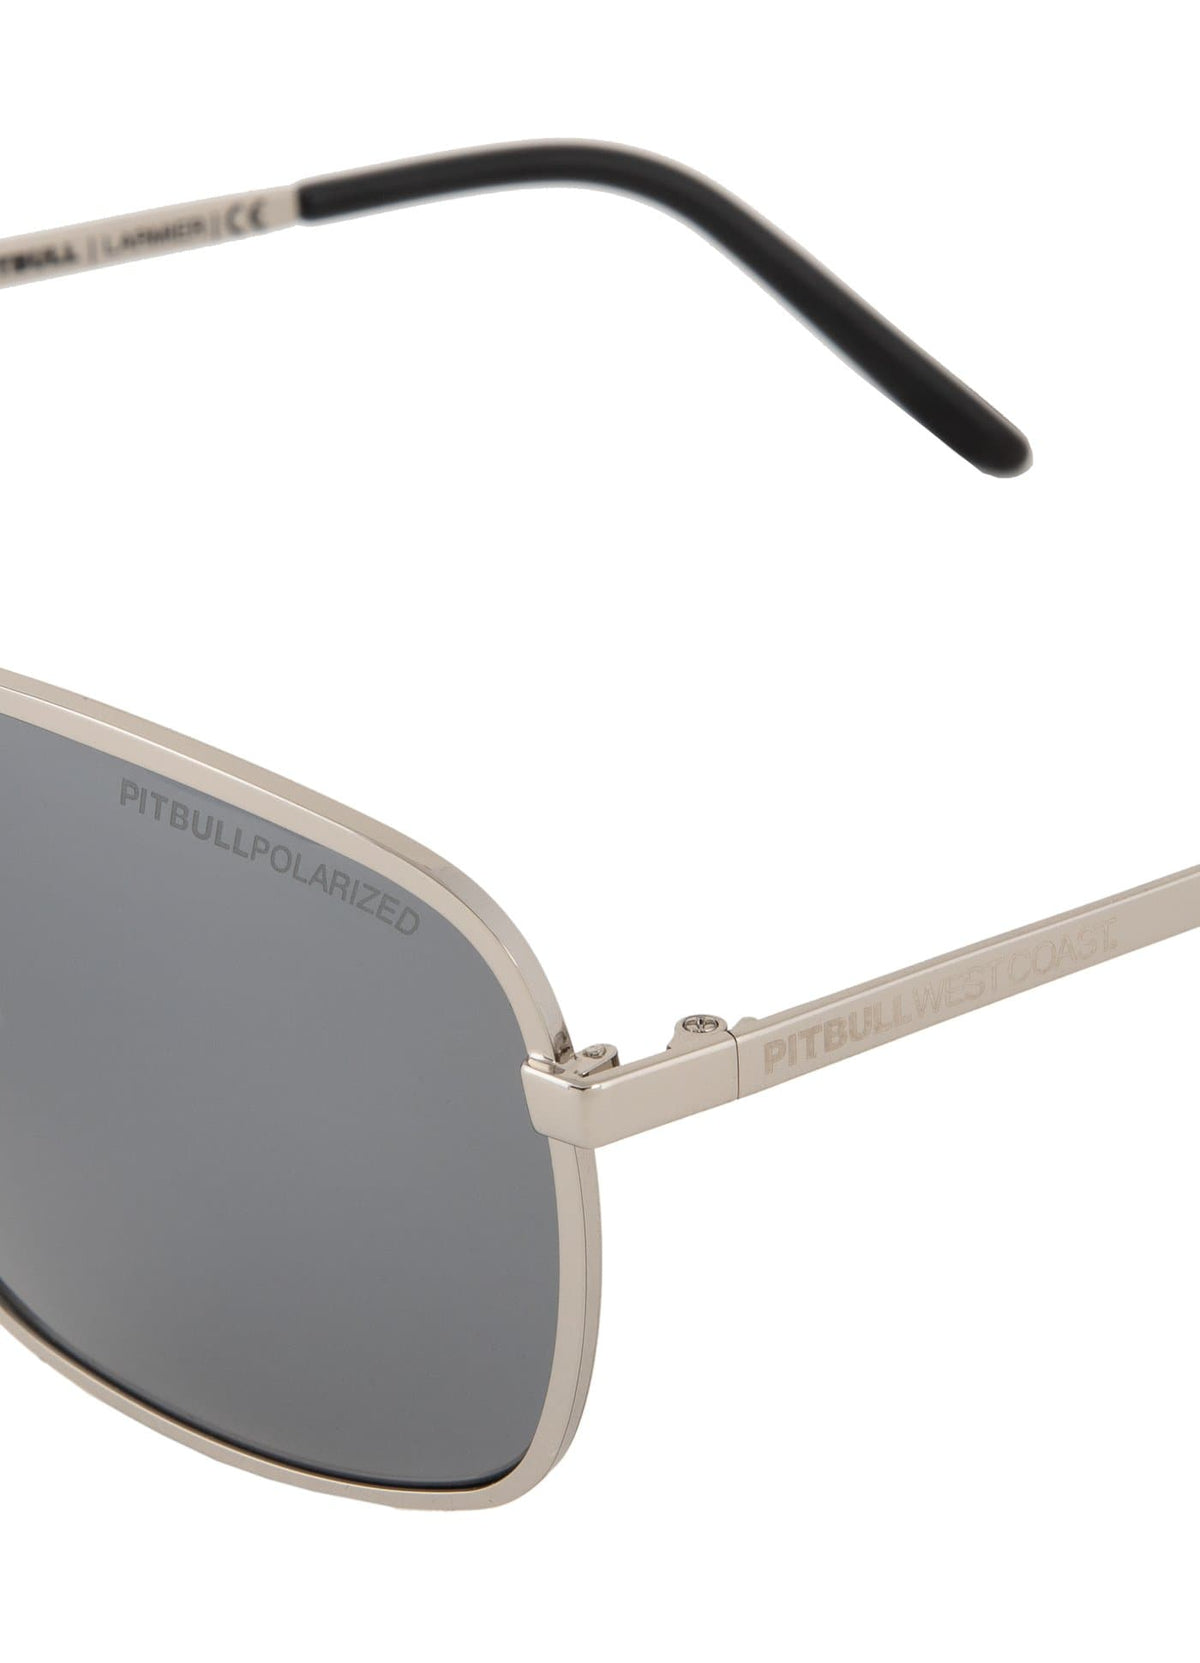 Sunglasses LARMIER Silver/Black - Pitbull West Coast International Store 